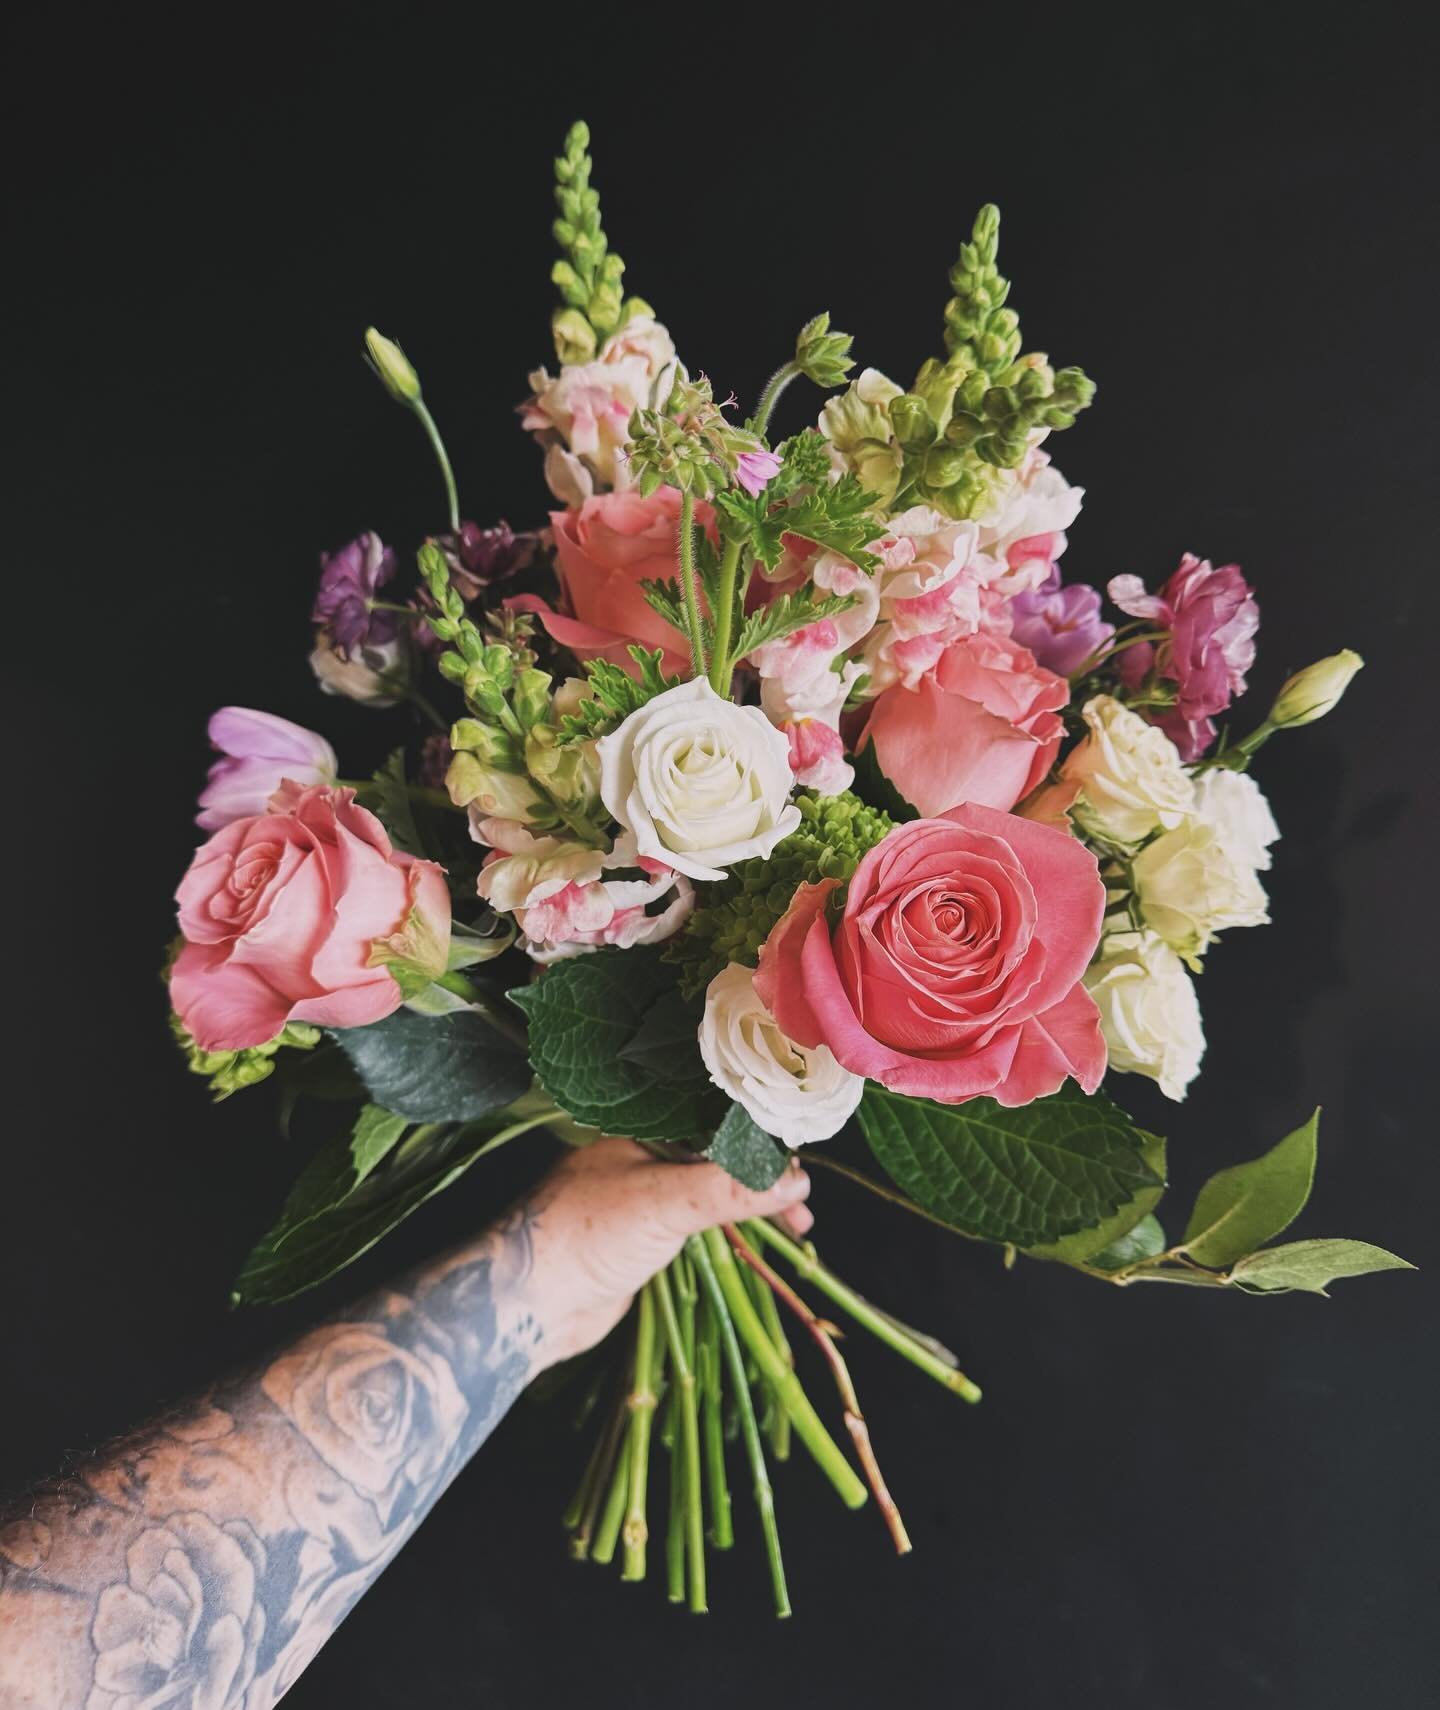 💞 Mother&rsquo;s Day Extended hours :
Tomorrow 10am-6pm
Saturday 10am-4pm
Sunday 9am-12pm
Come grab a custom hand tied bouquet 💐 

#handtiedbouquet #fleurshop #stembar #fleurshopquincy #florist #mothersdaybouquet #fleurforever #quincy #Wollaston #n